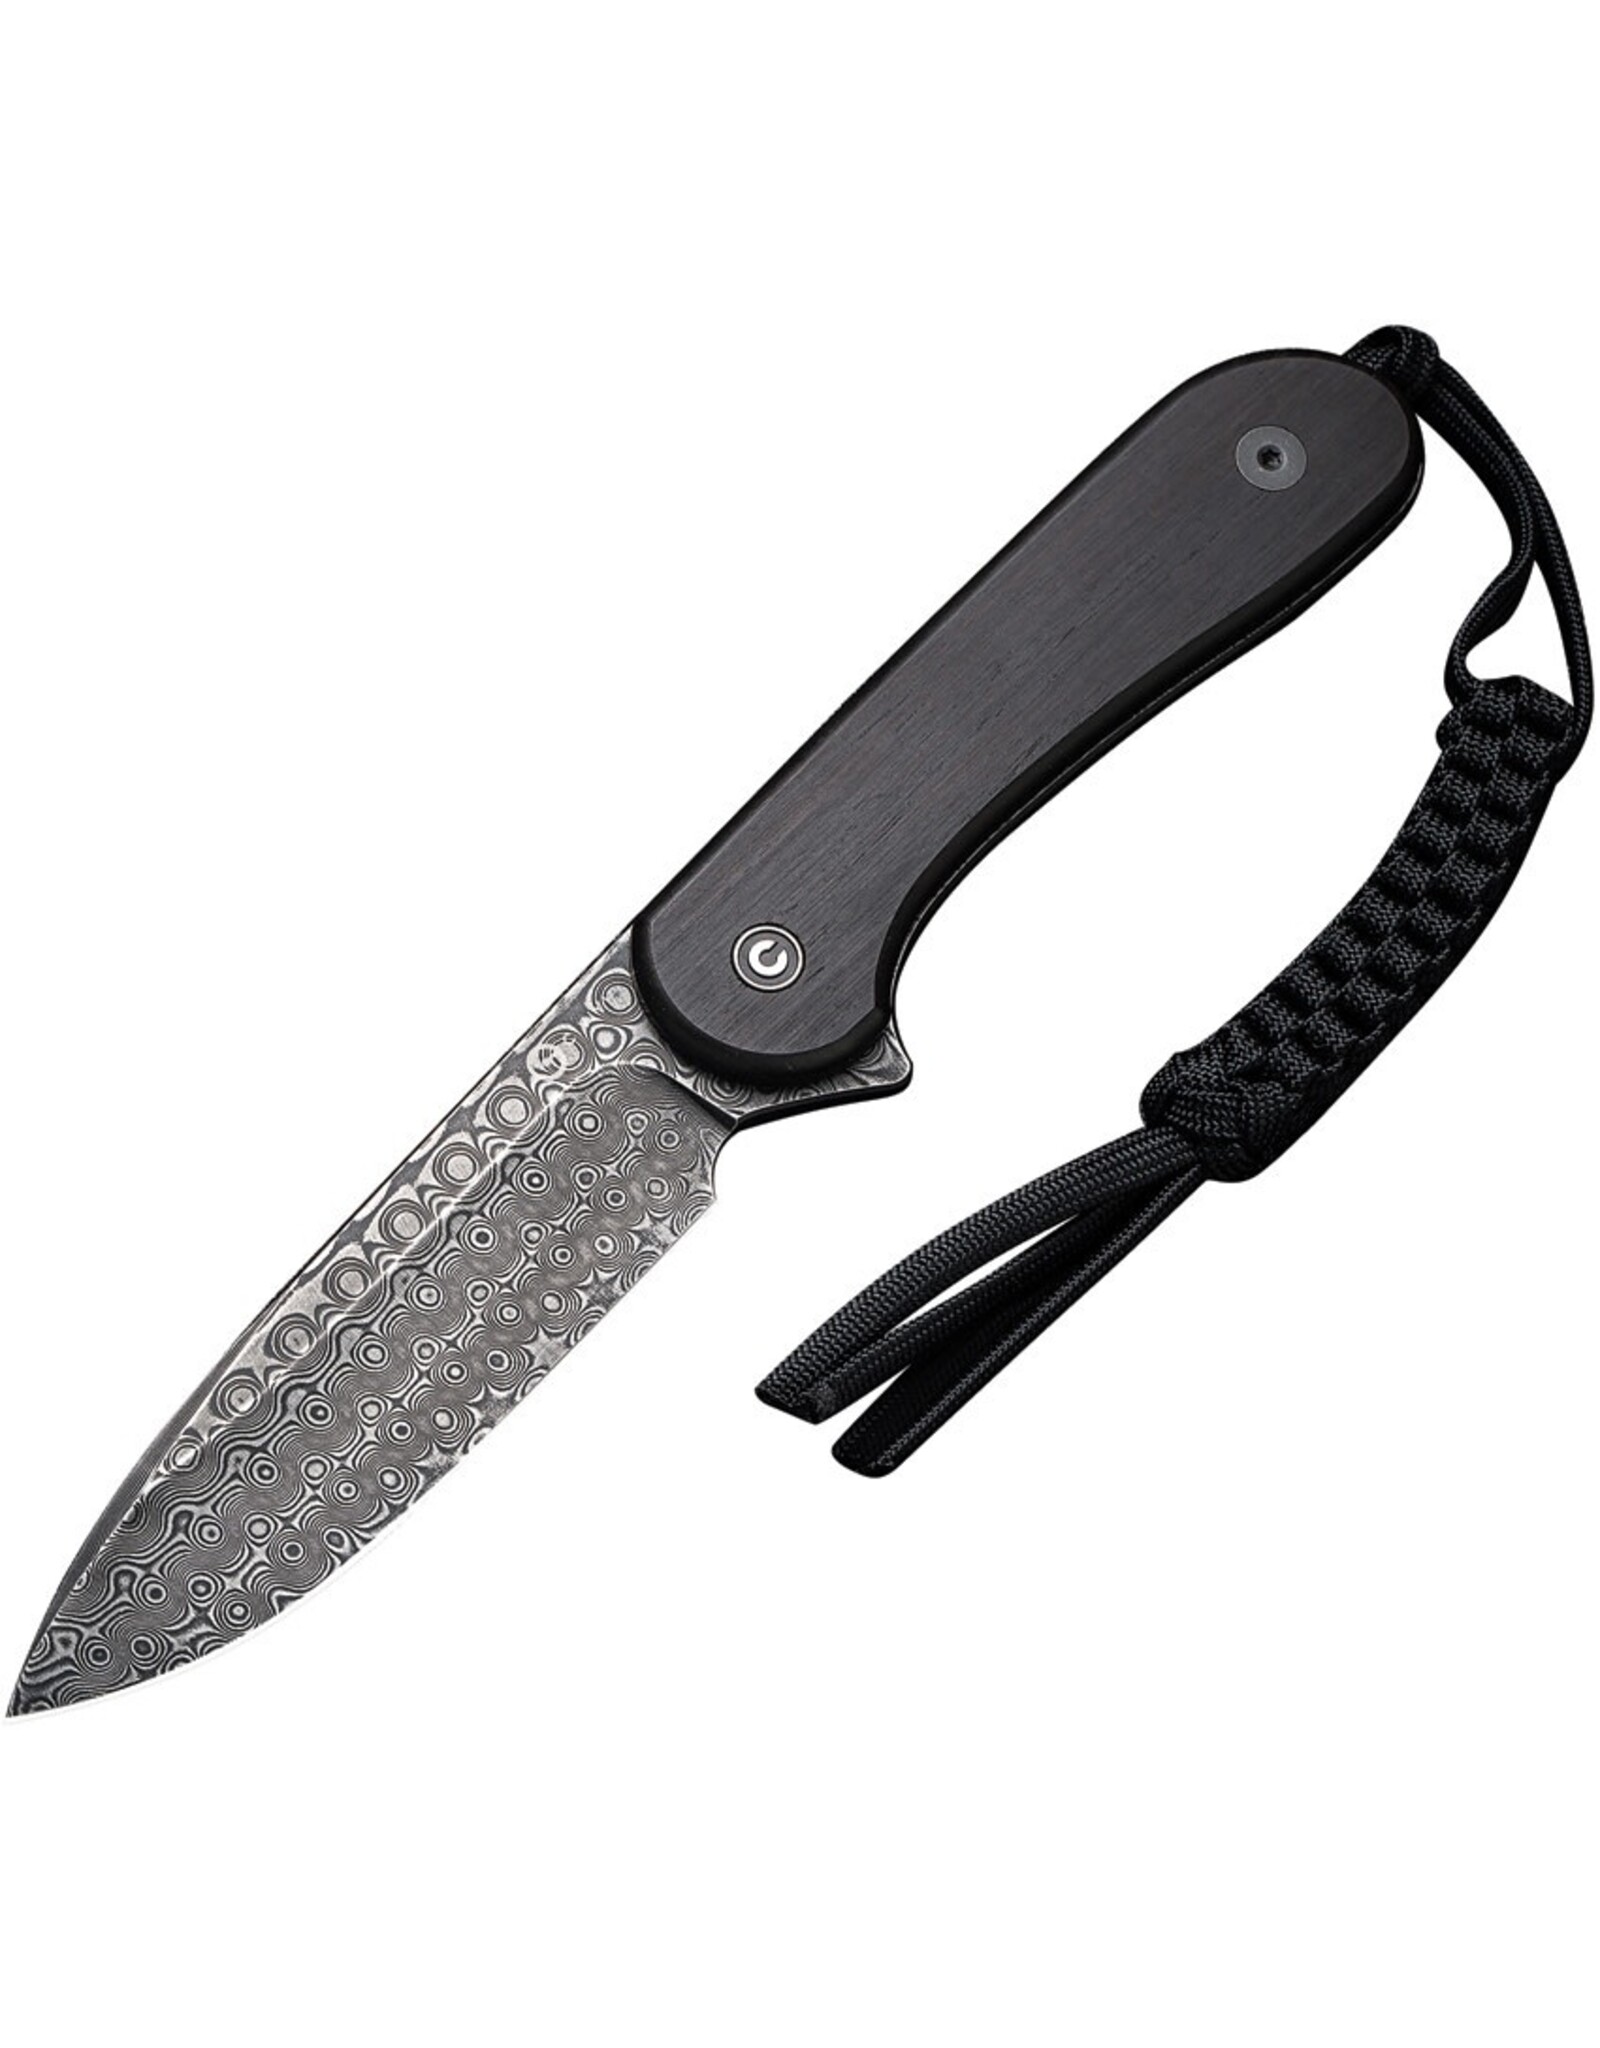 Civivi CIVIVI Knives C2105-DS1 Elementum Fixed Blade Knife 3.98" Damascus Blade, Ebony Wood Handles, Kydex Sheath